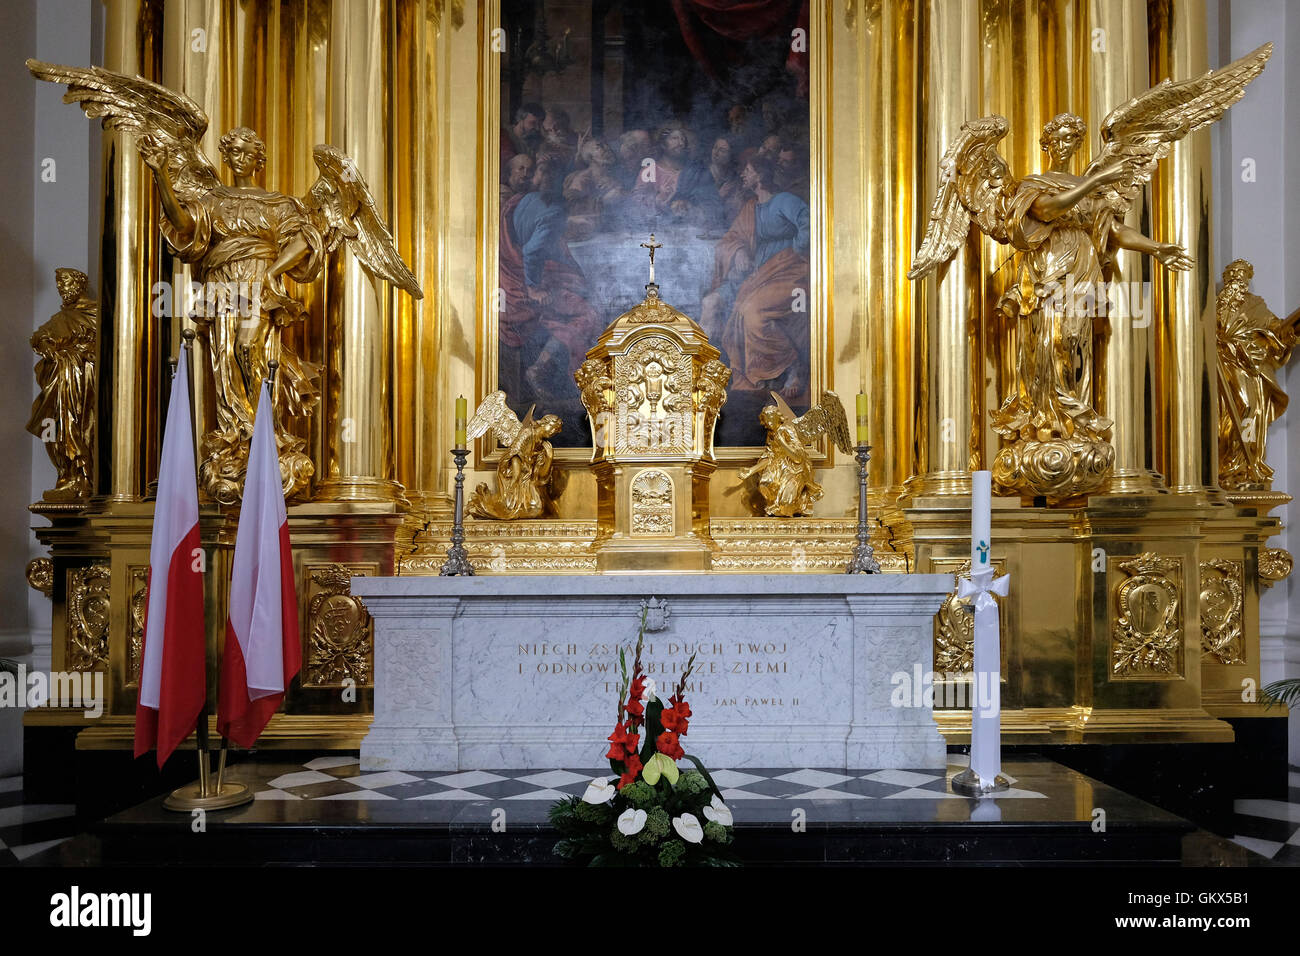 Roman Catholic Church Gilded Interior Altar Photo Poster 18x12 inch